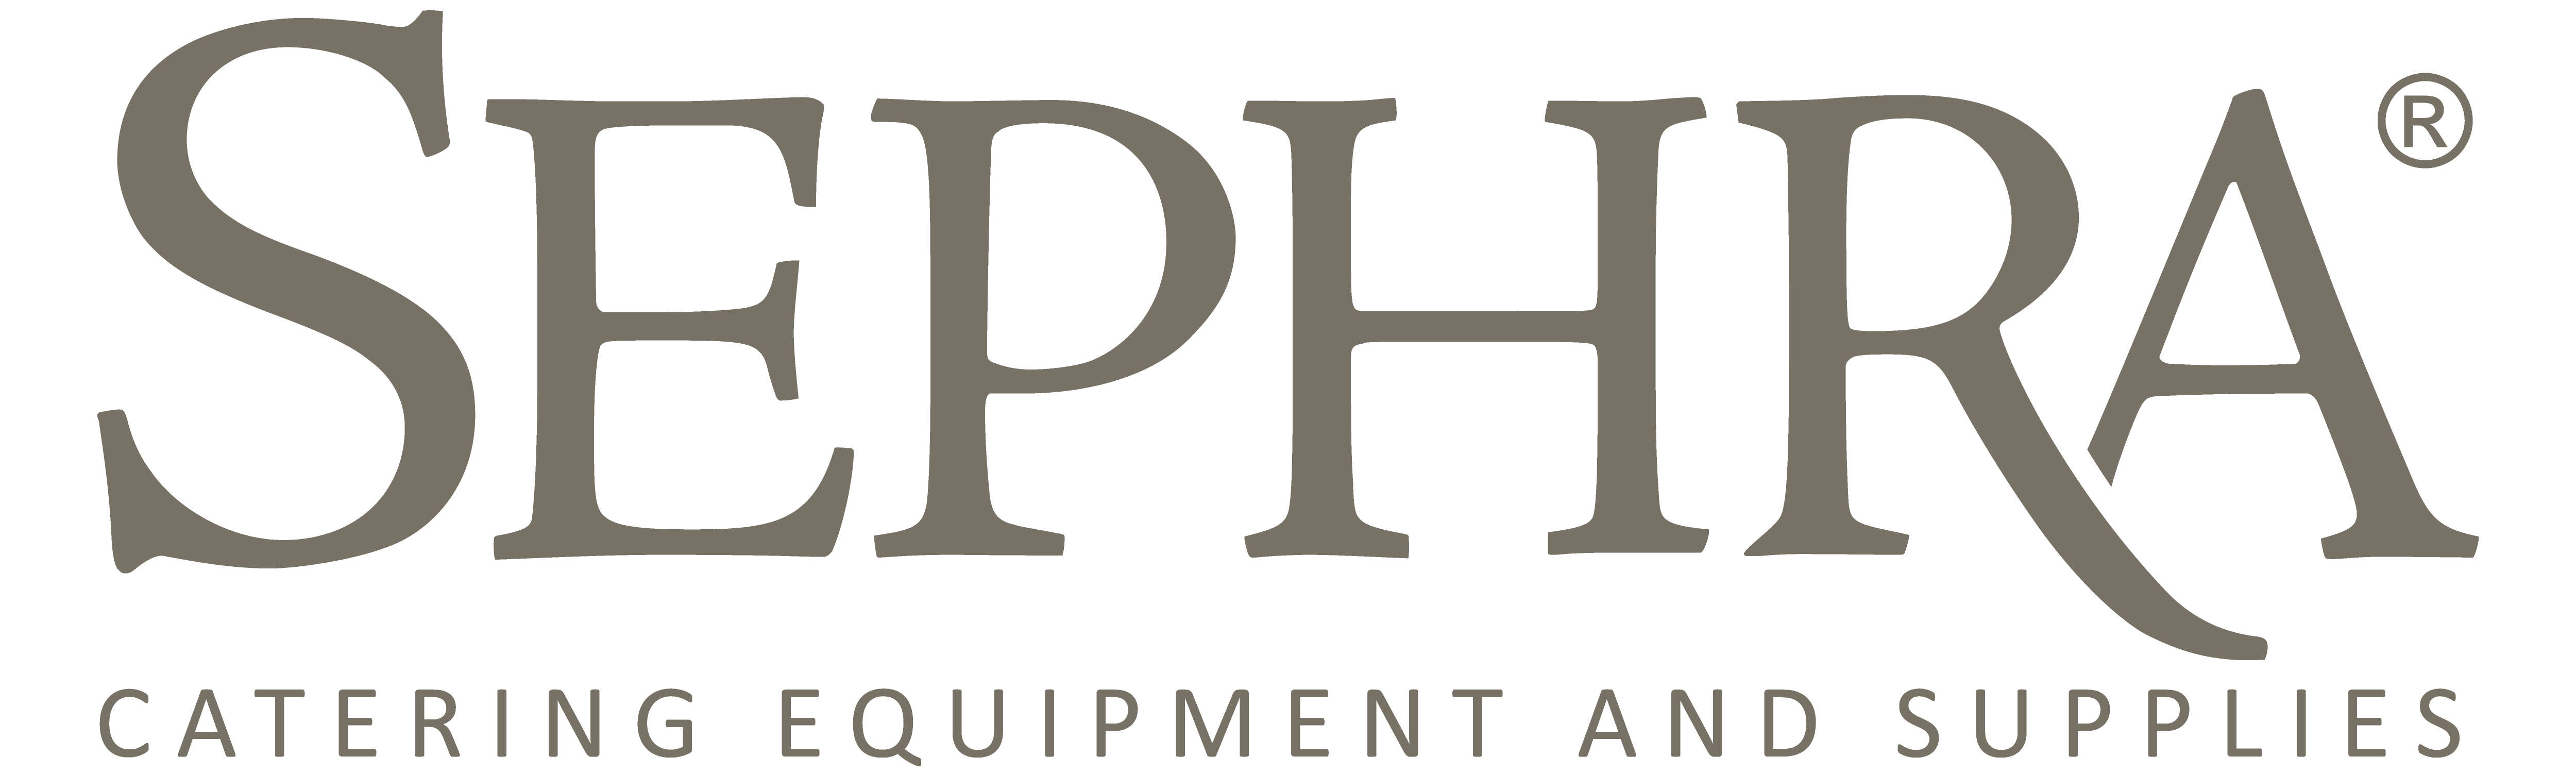 Sephra – Catering Equipment & Supplies